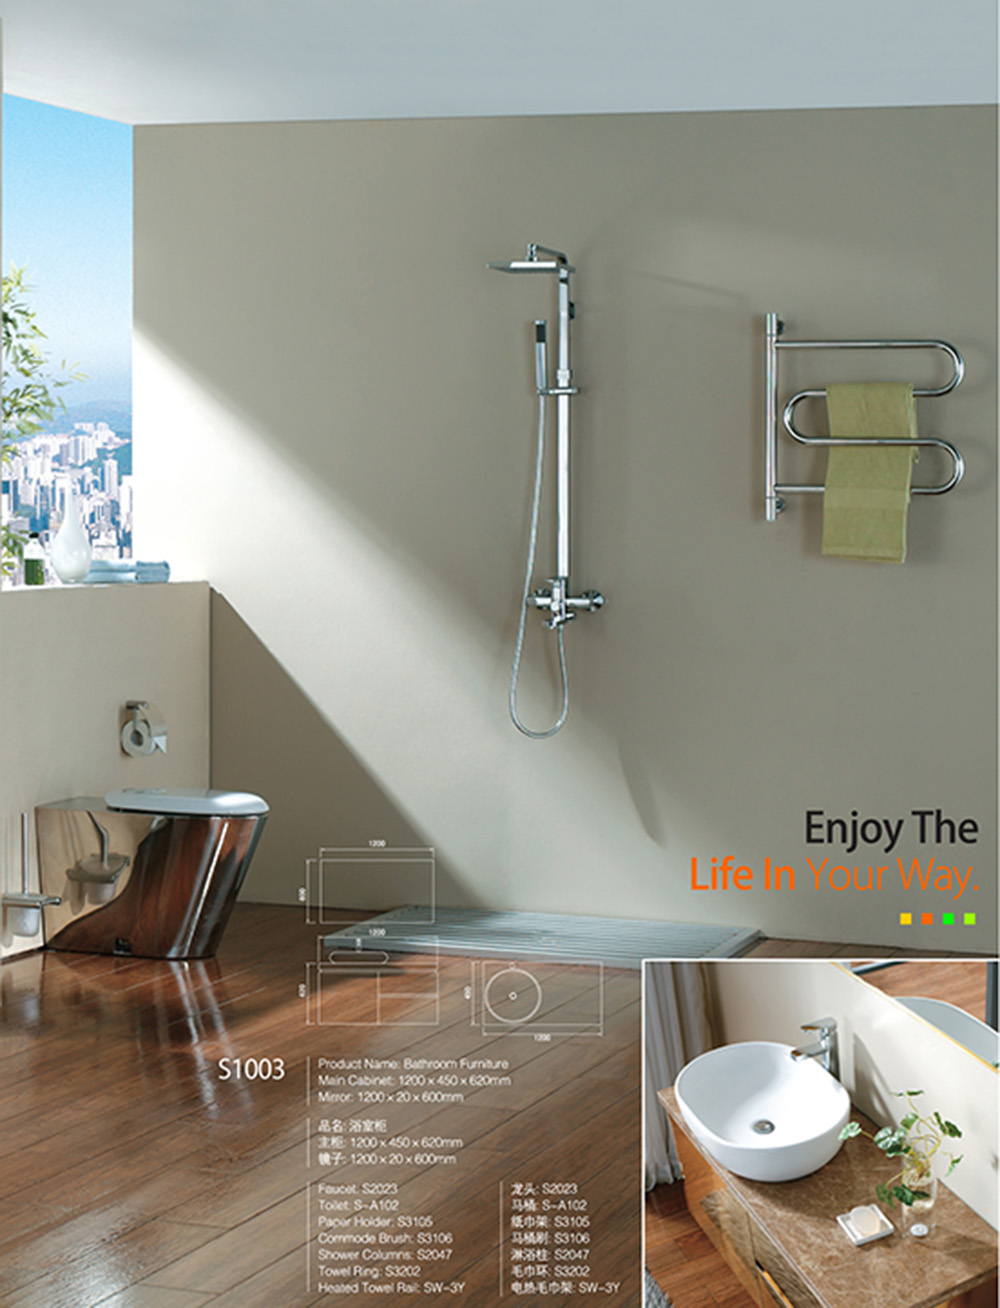 Tarriou creates high quality bathroom space